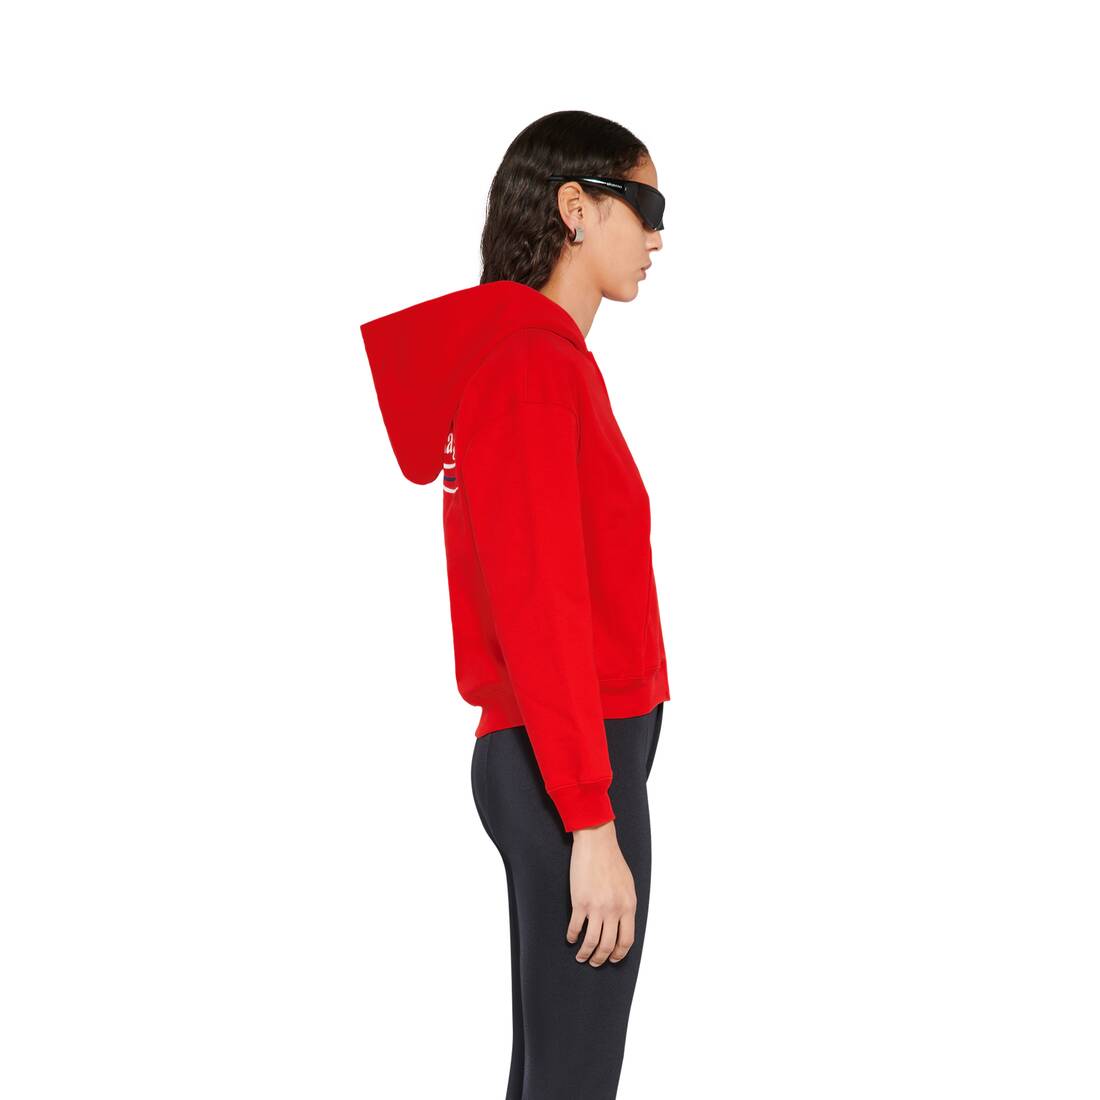 Balenciaga Women's Tape Type Ripped Pocket Zip-Up Hoodie Large Fit Red - Hoodies